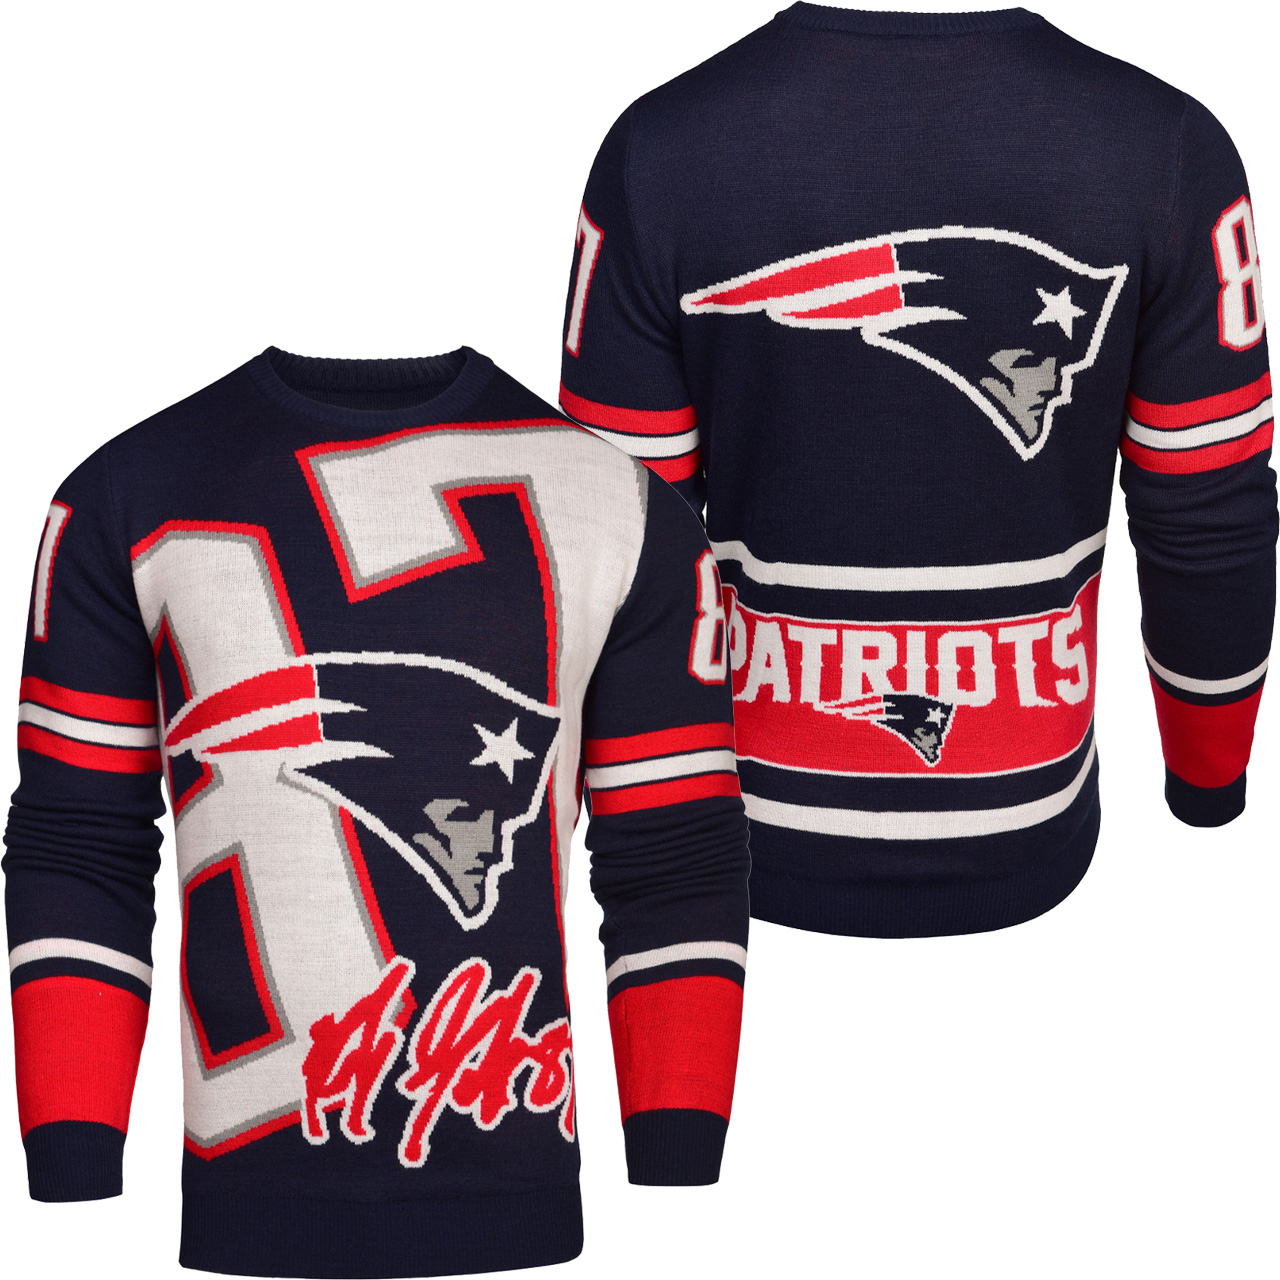 Rob Gronkowski #87 New England Patriots NFL Loud Player Sweater